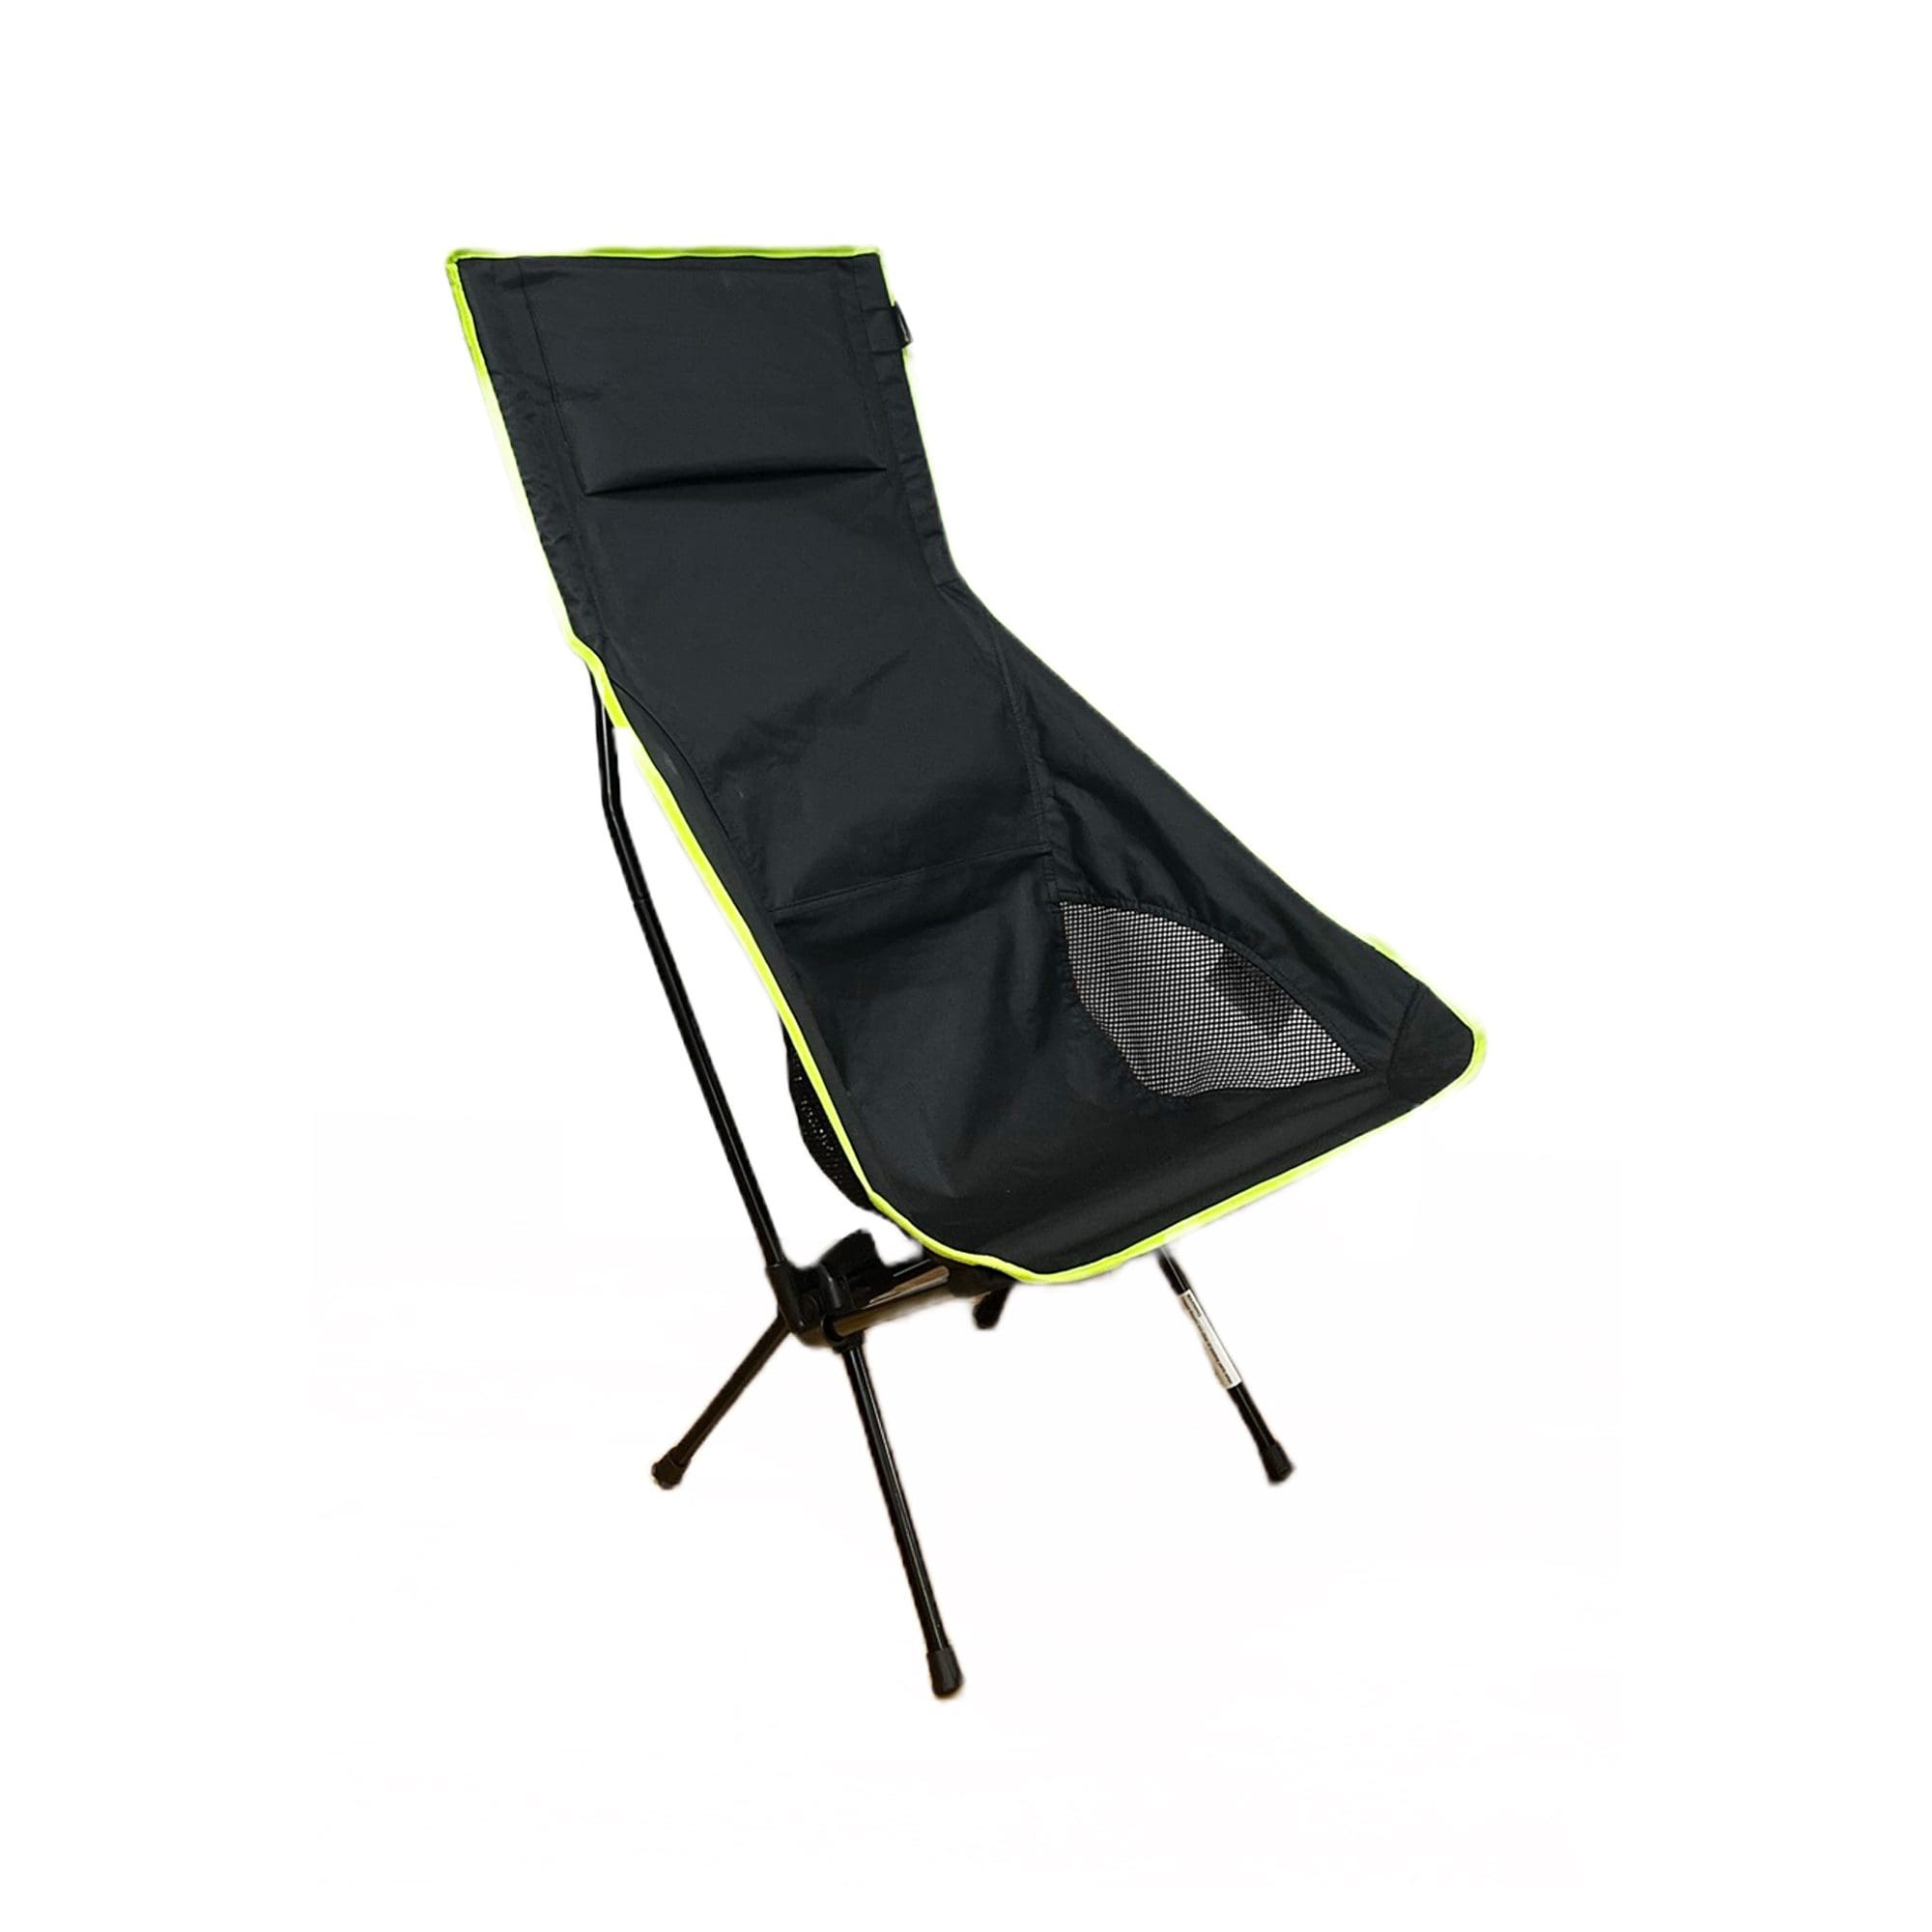 X-Lite Folding Compact Chair